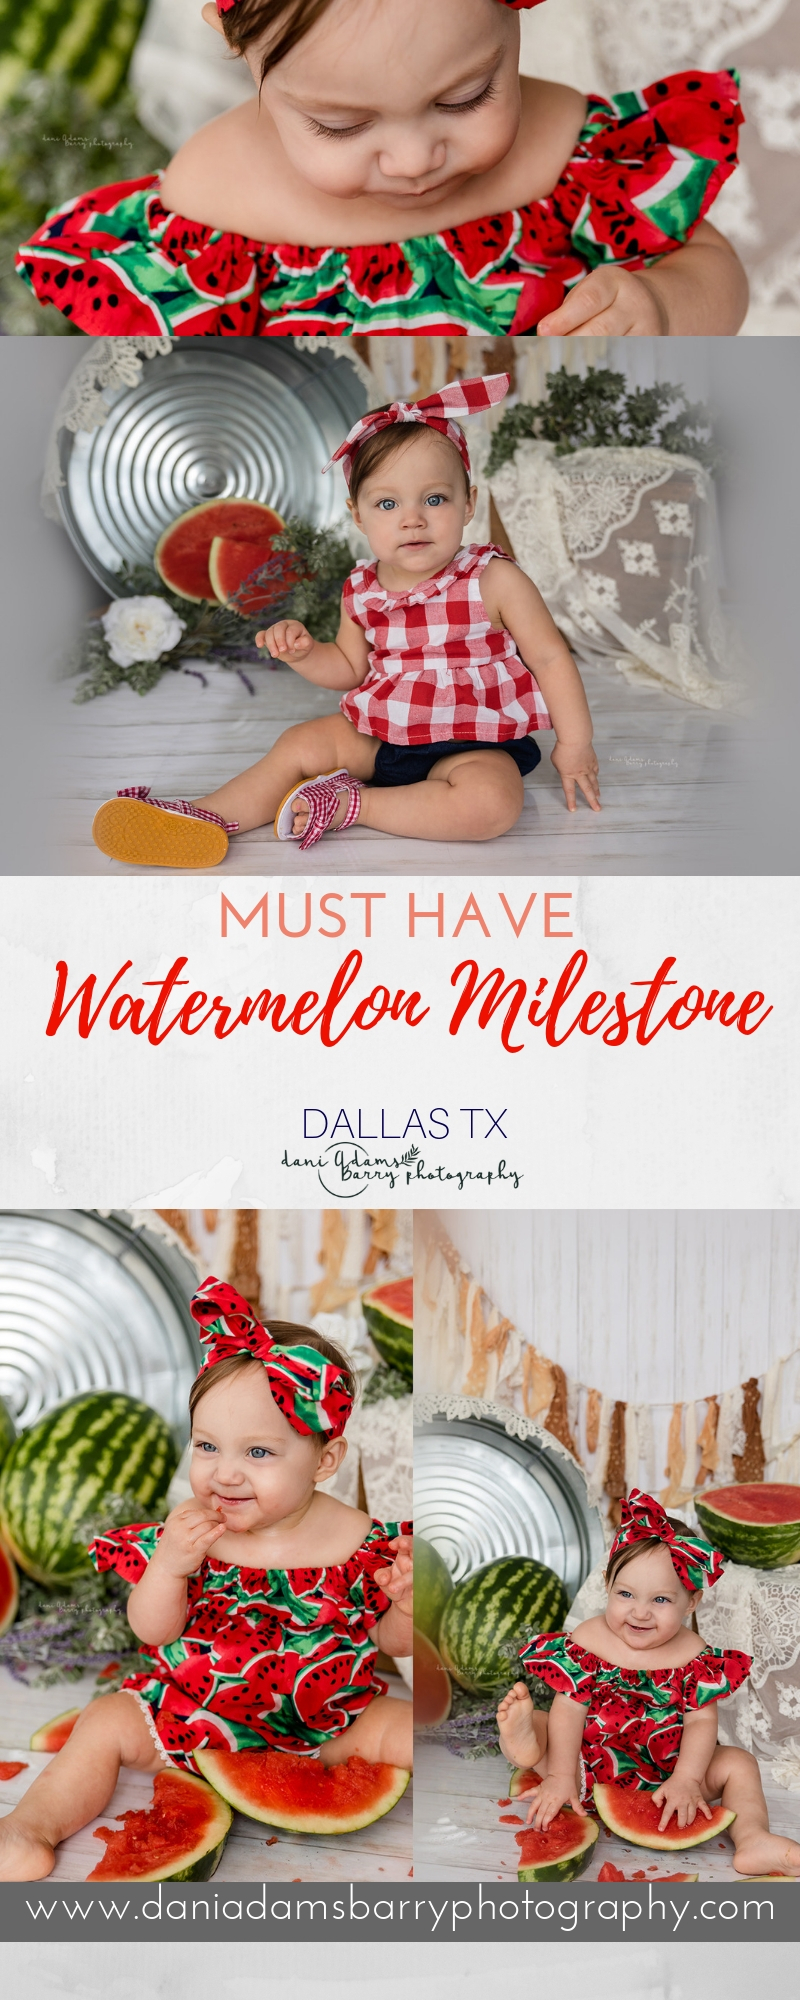 Must have Watermelon Baby Milestone Photography - Dallas TX Dani Adams Barry